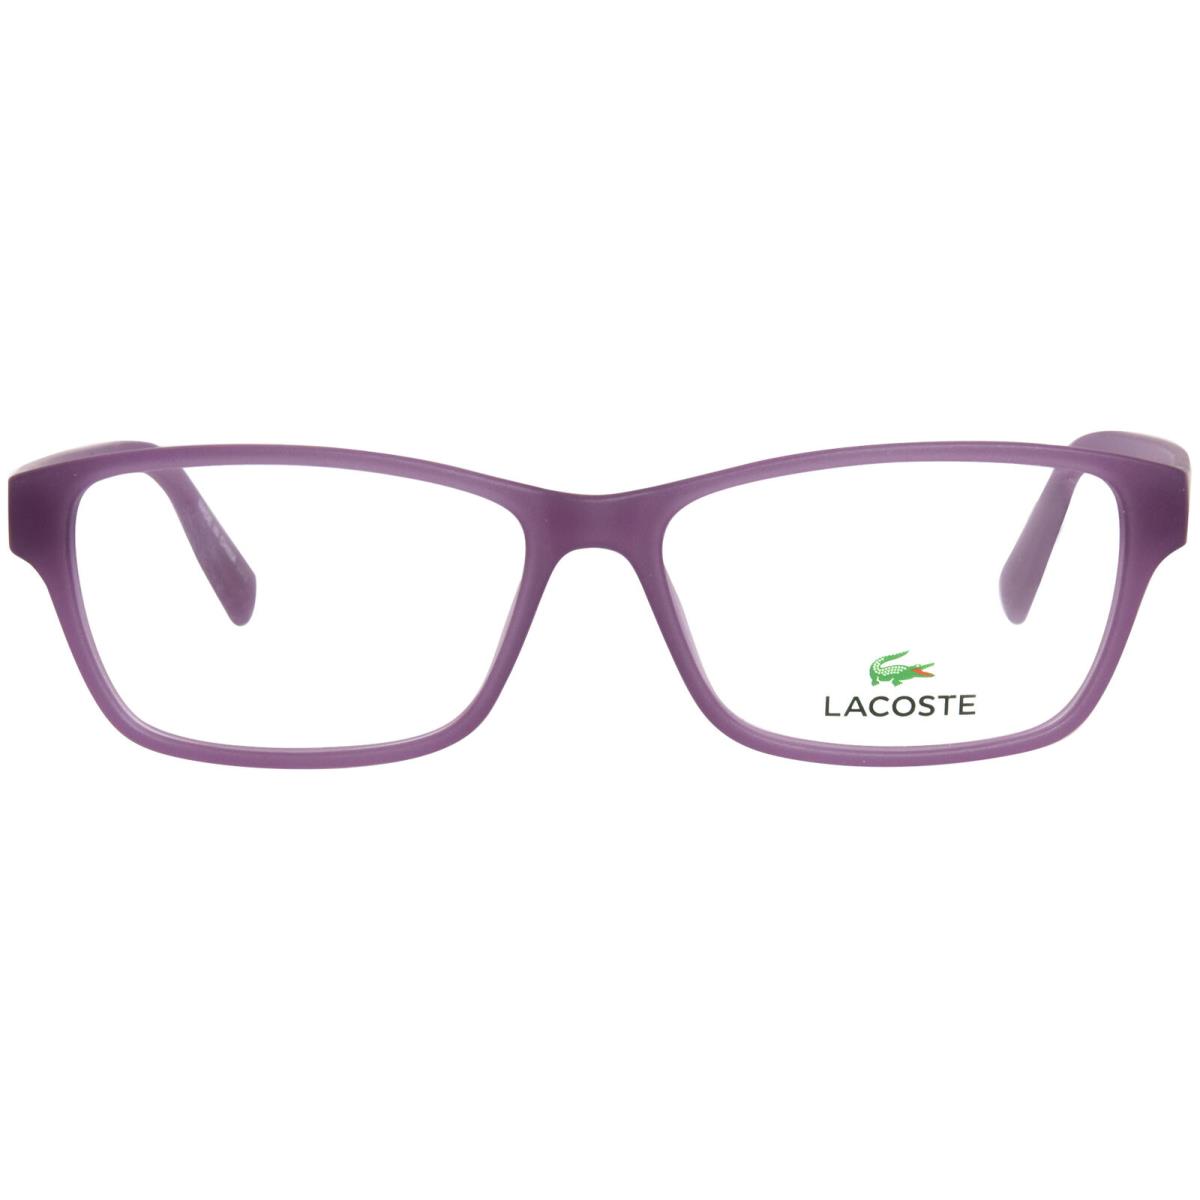 Lacoste L3650 514 Eyeglasses Frame Youth Matte Violet Lumi Full Rim 50mm - Frame: Purple